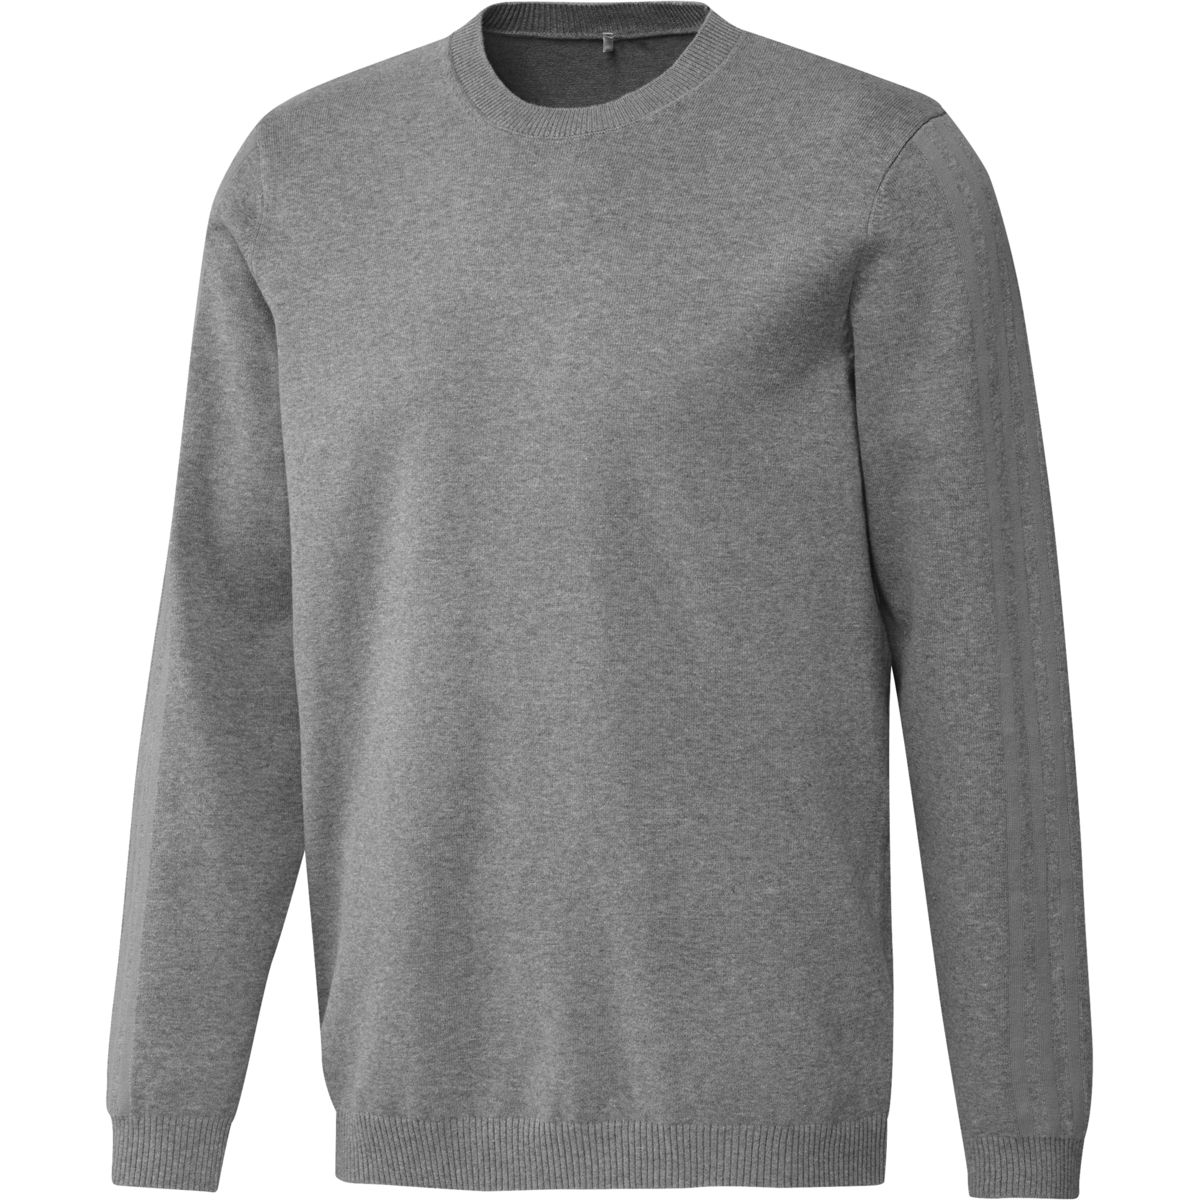 adidas Sweater Pullover Herren grau